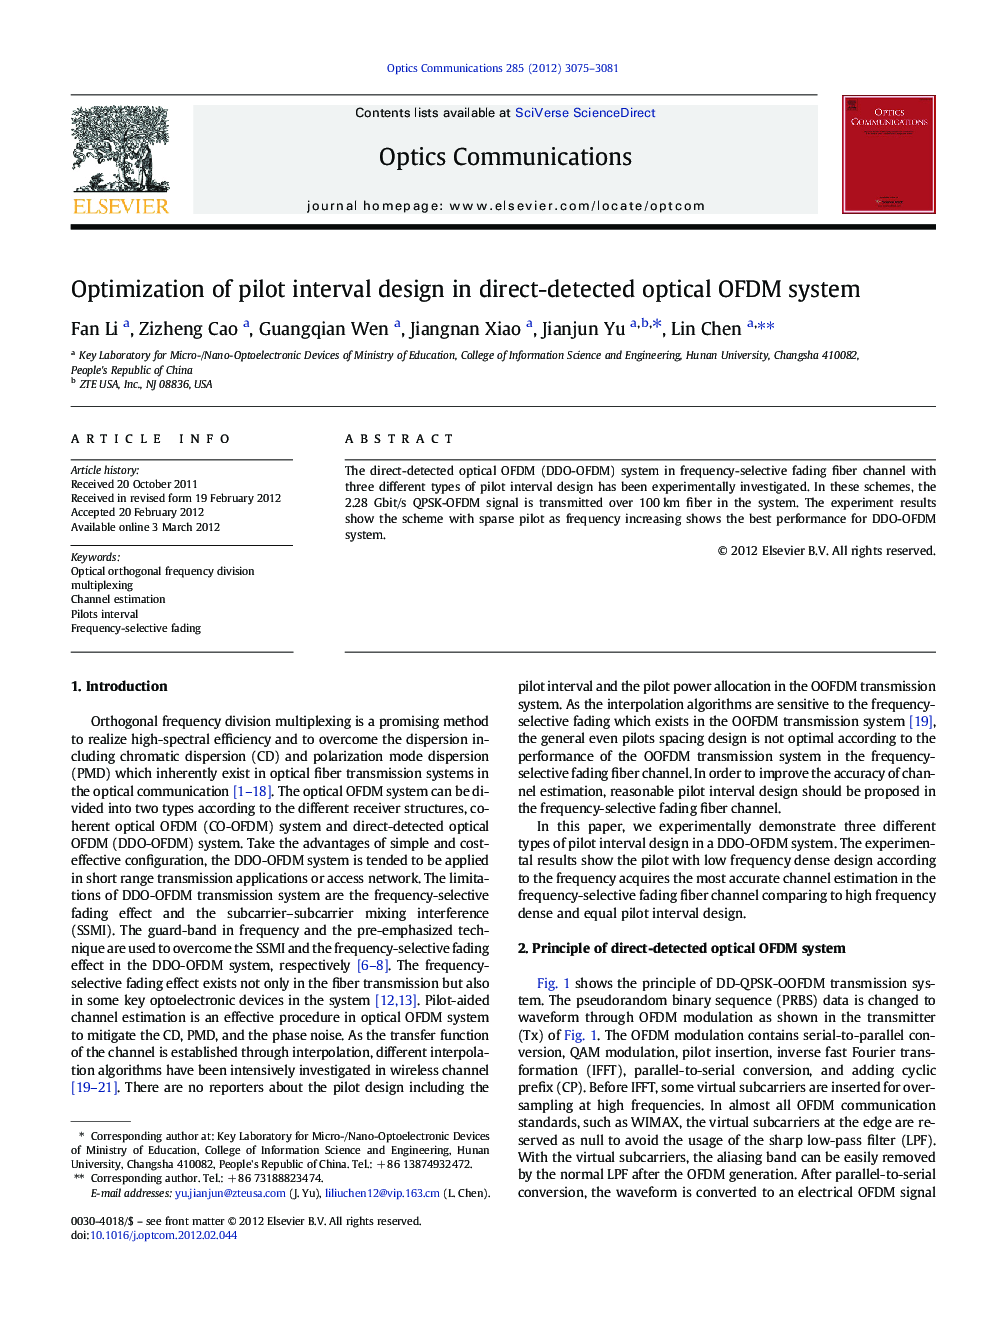 Optimization of pilot interval design in direct-detected optical OFDM system